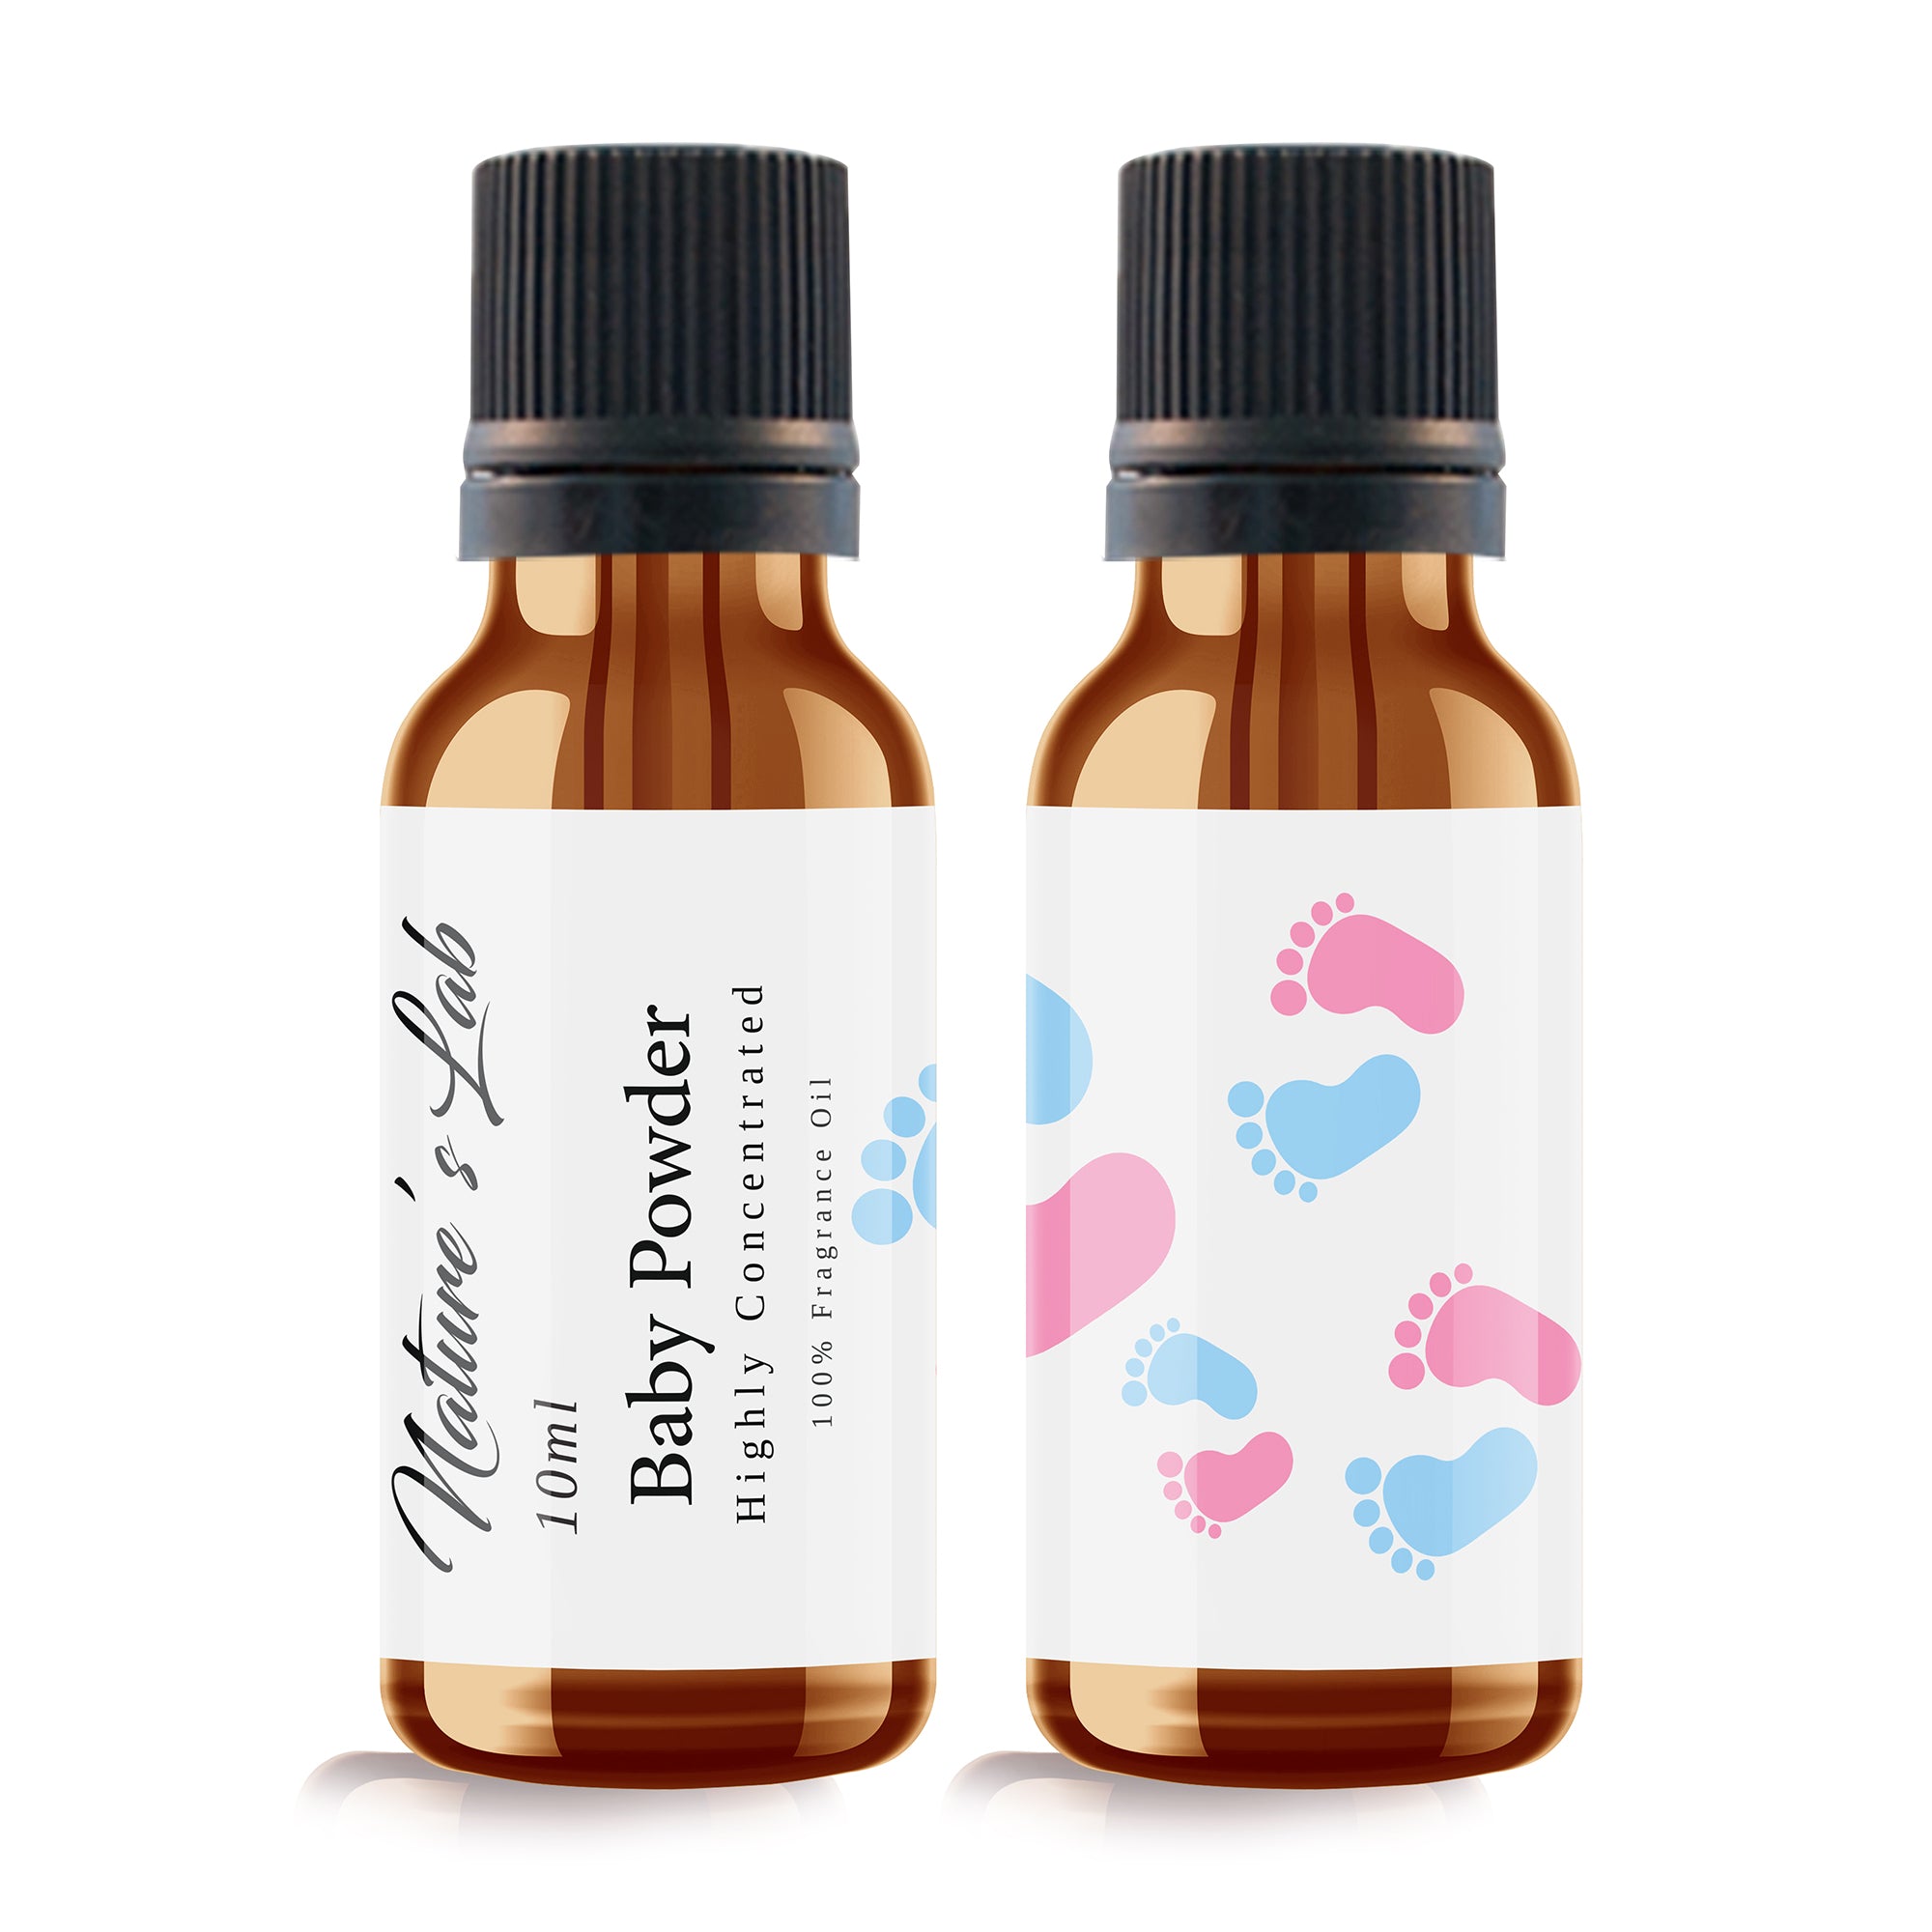 Baby Powder Premium Fragrance Oil, 4 fl oz (118 ml) Bottle & Dropper